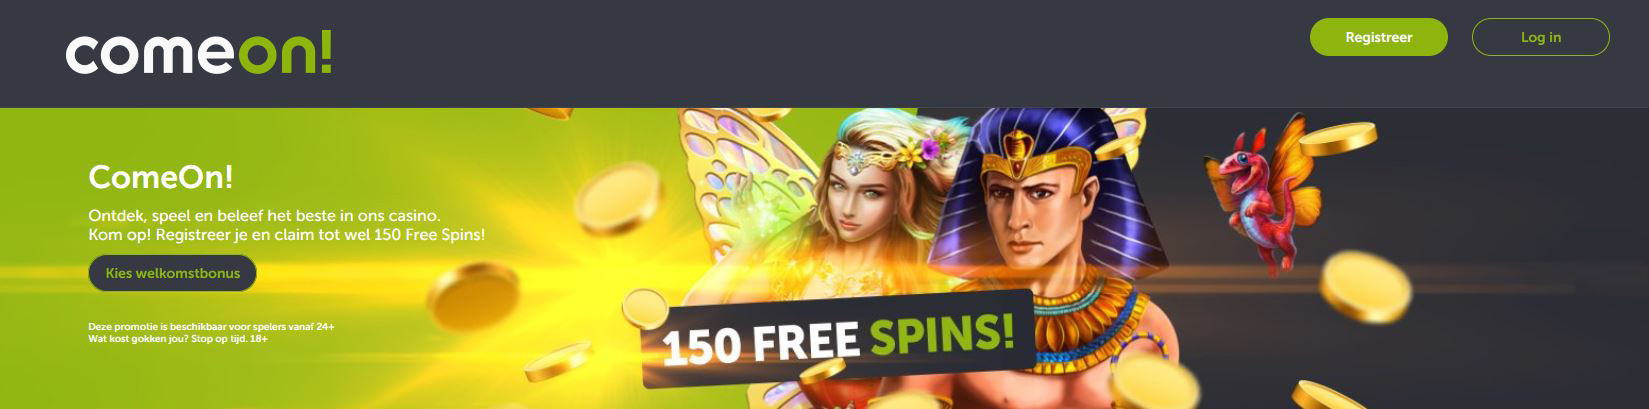 ComeOn! Casino free spins bonus